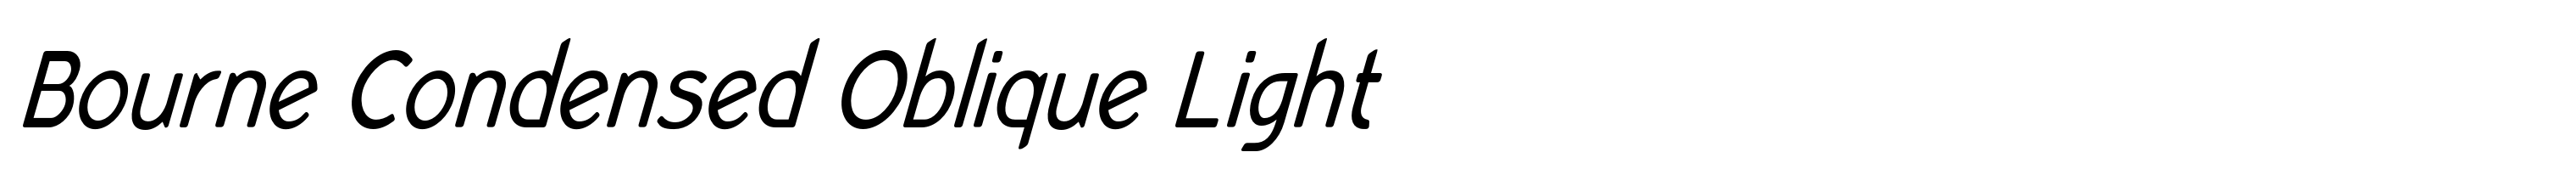 Bourne Condensed Oblique Light